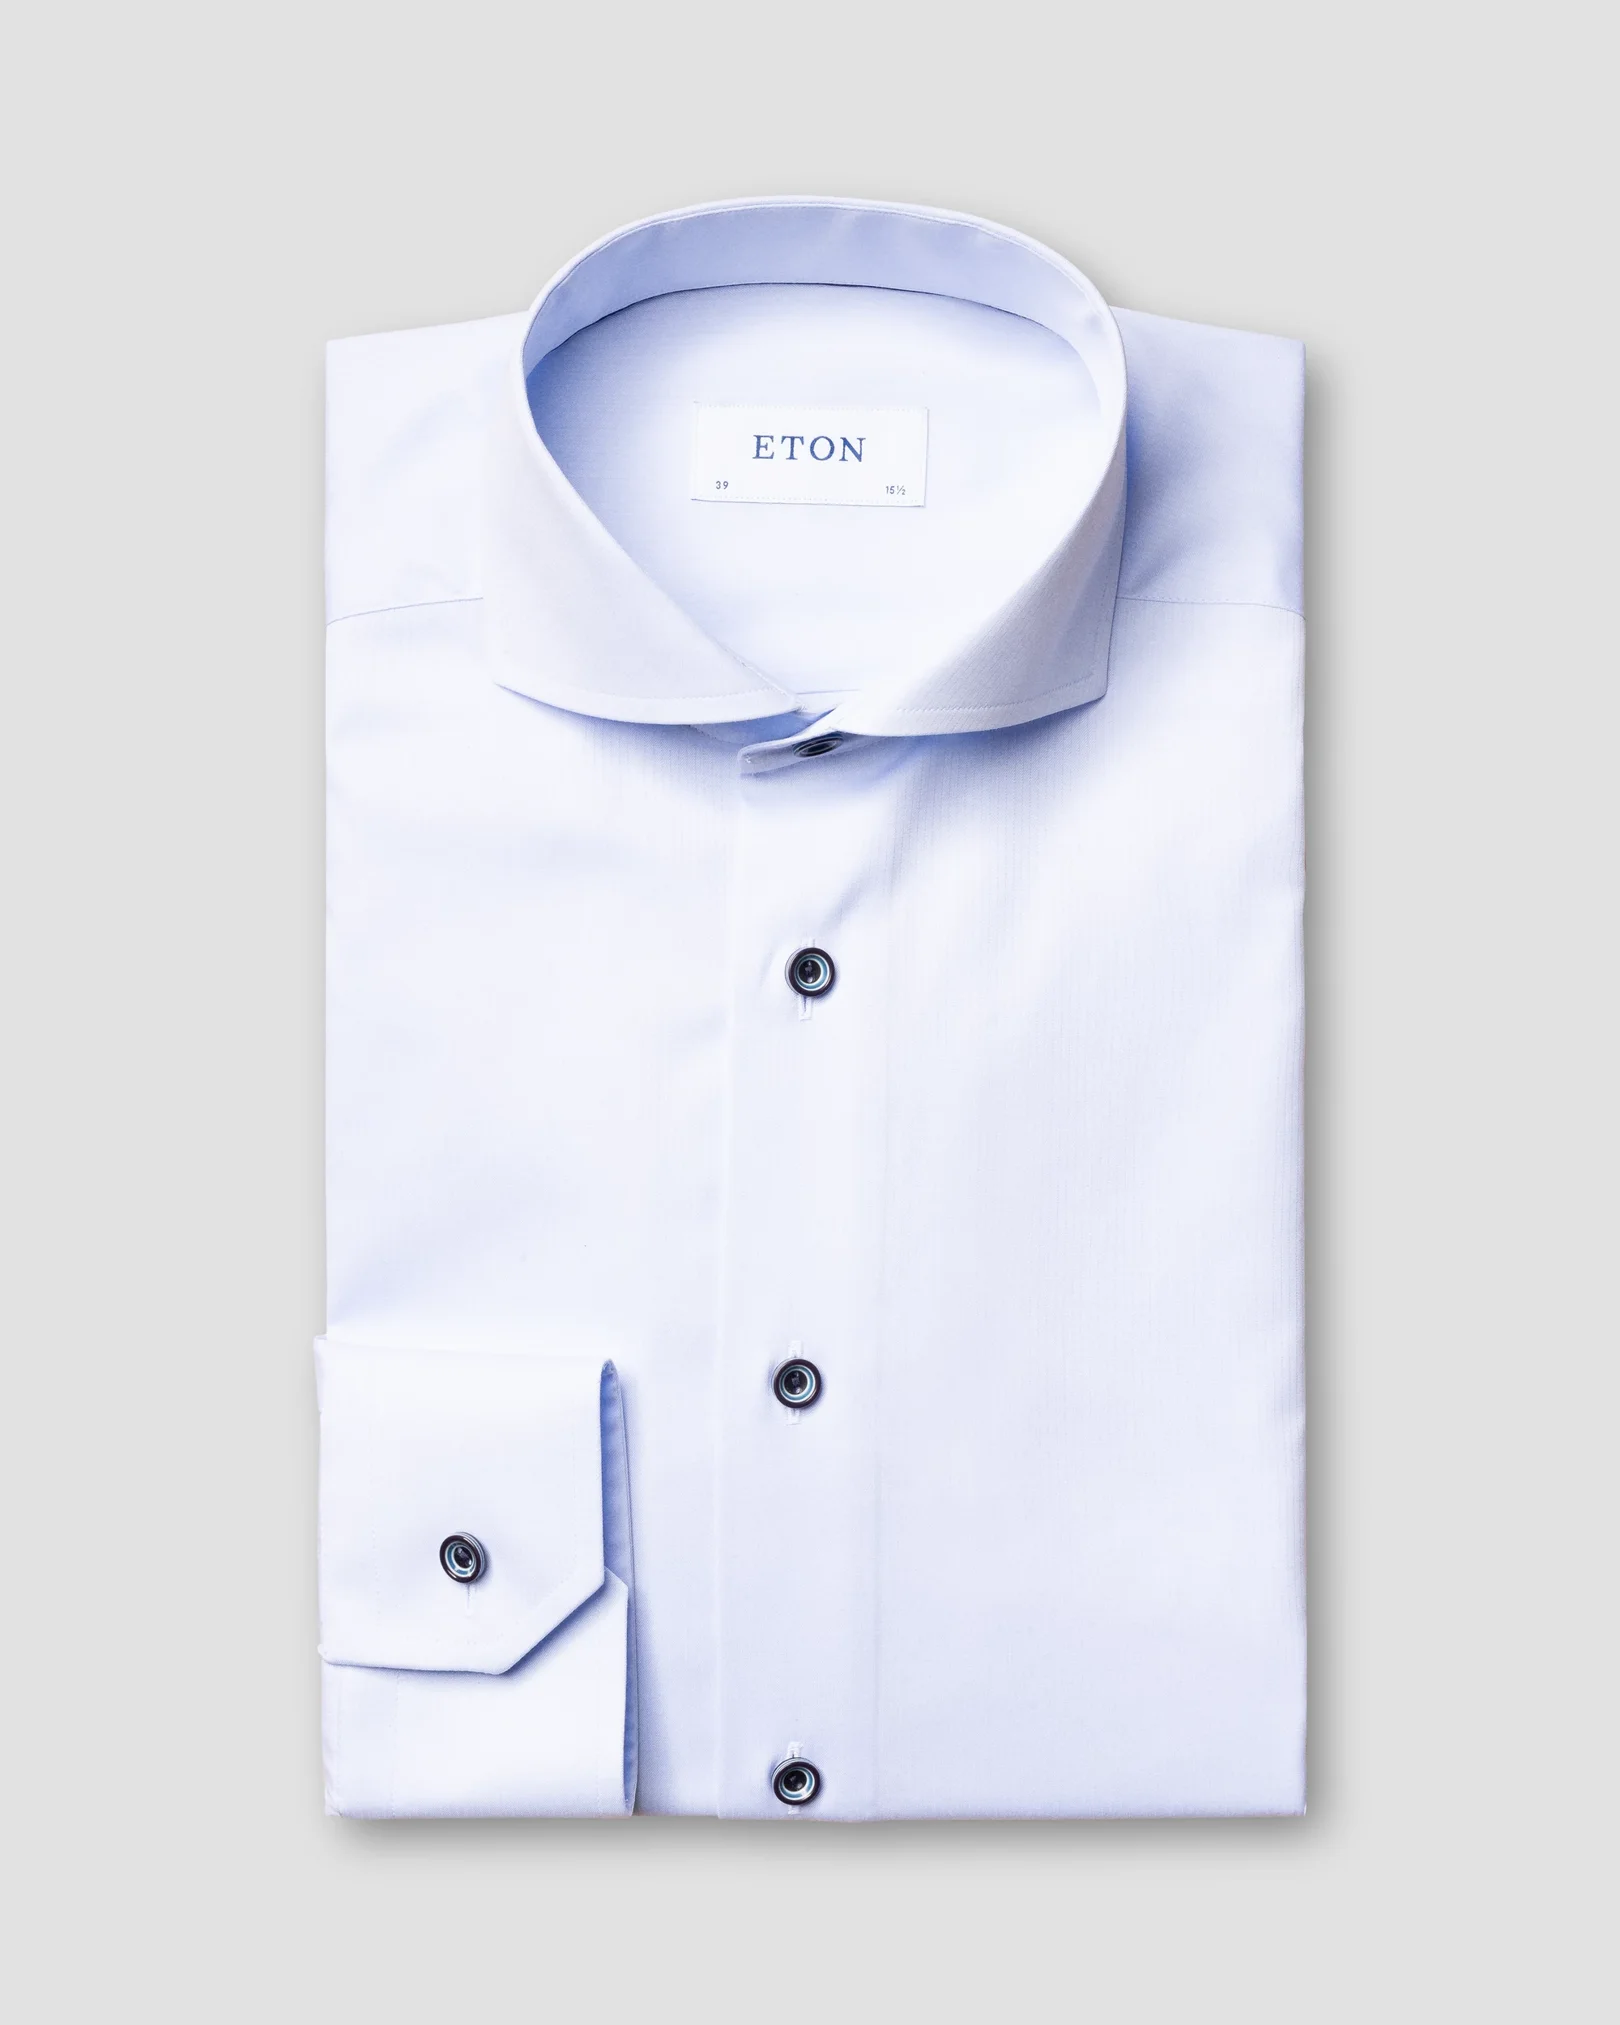 Eton - blue twill shirt extreme cut away